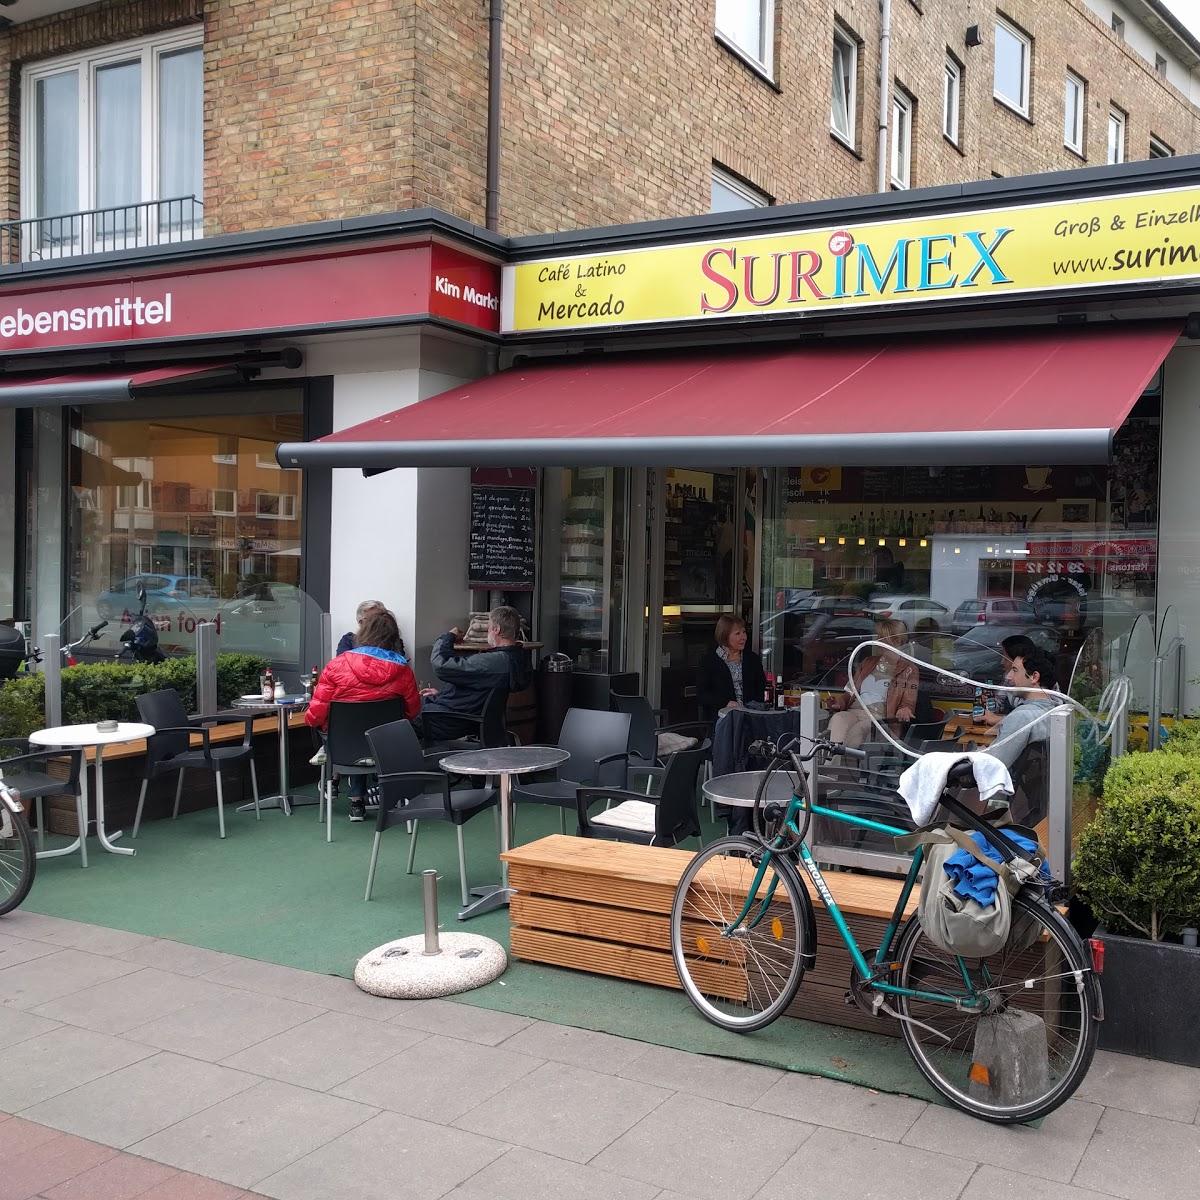 Restaurant "Surimex" in Hamburg